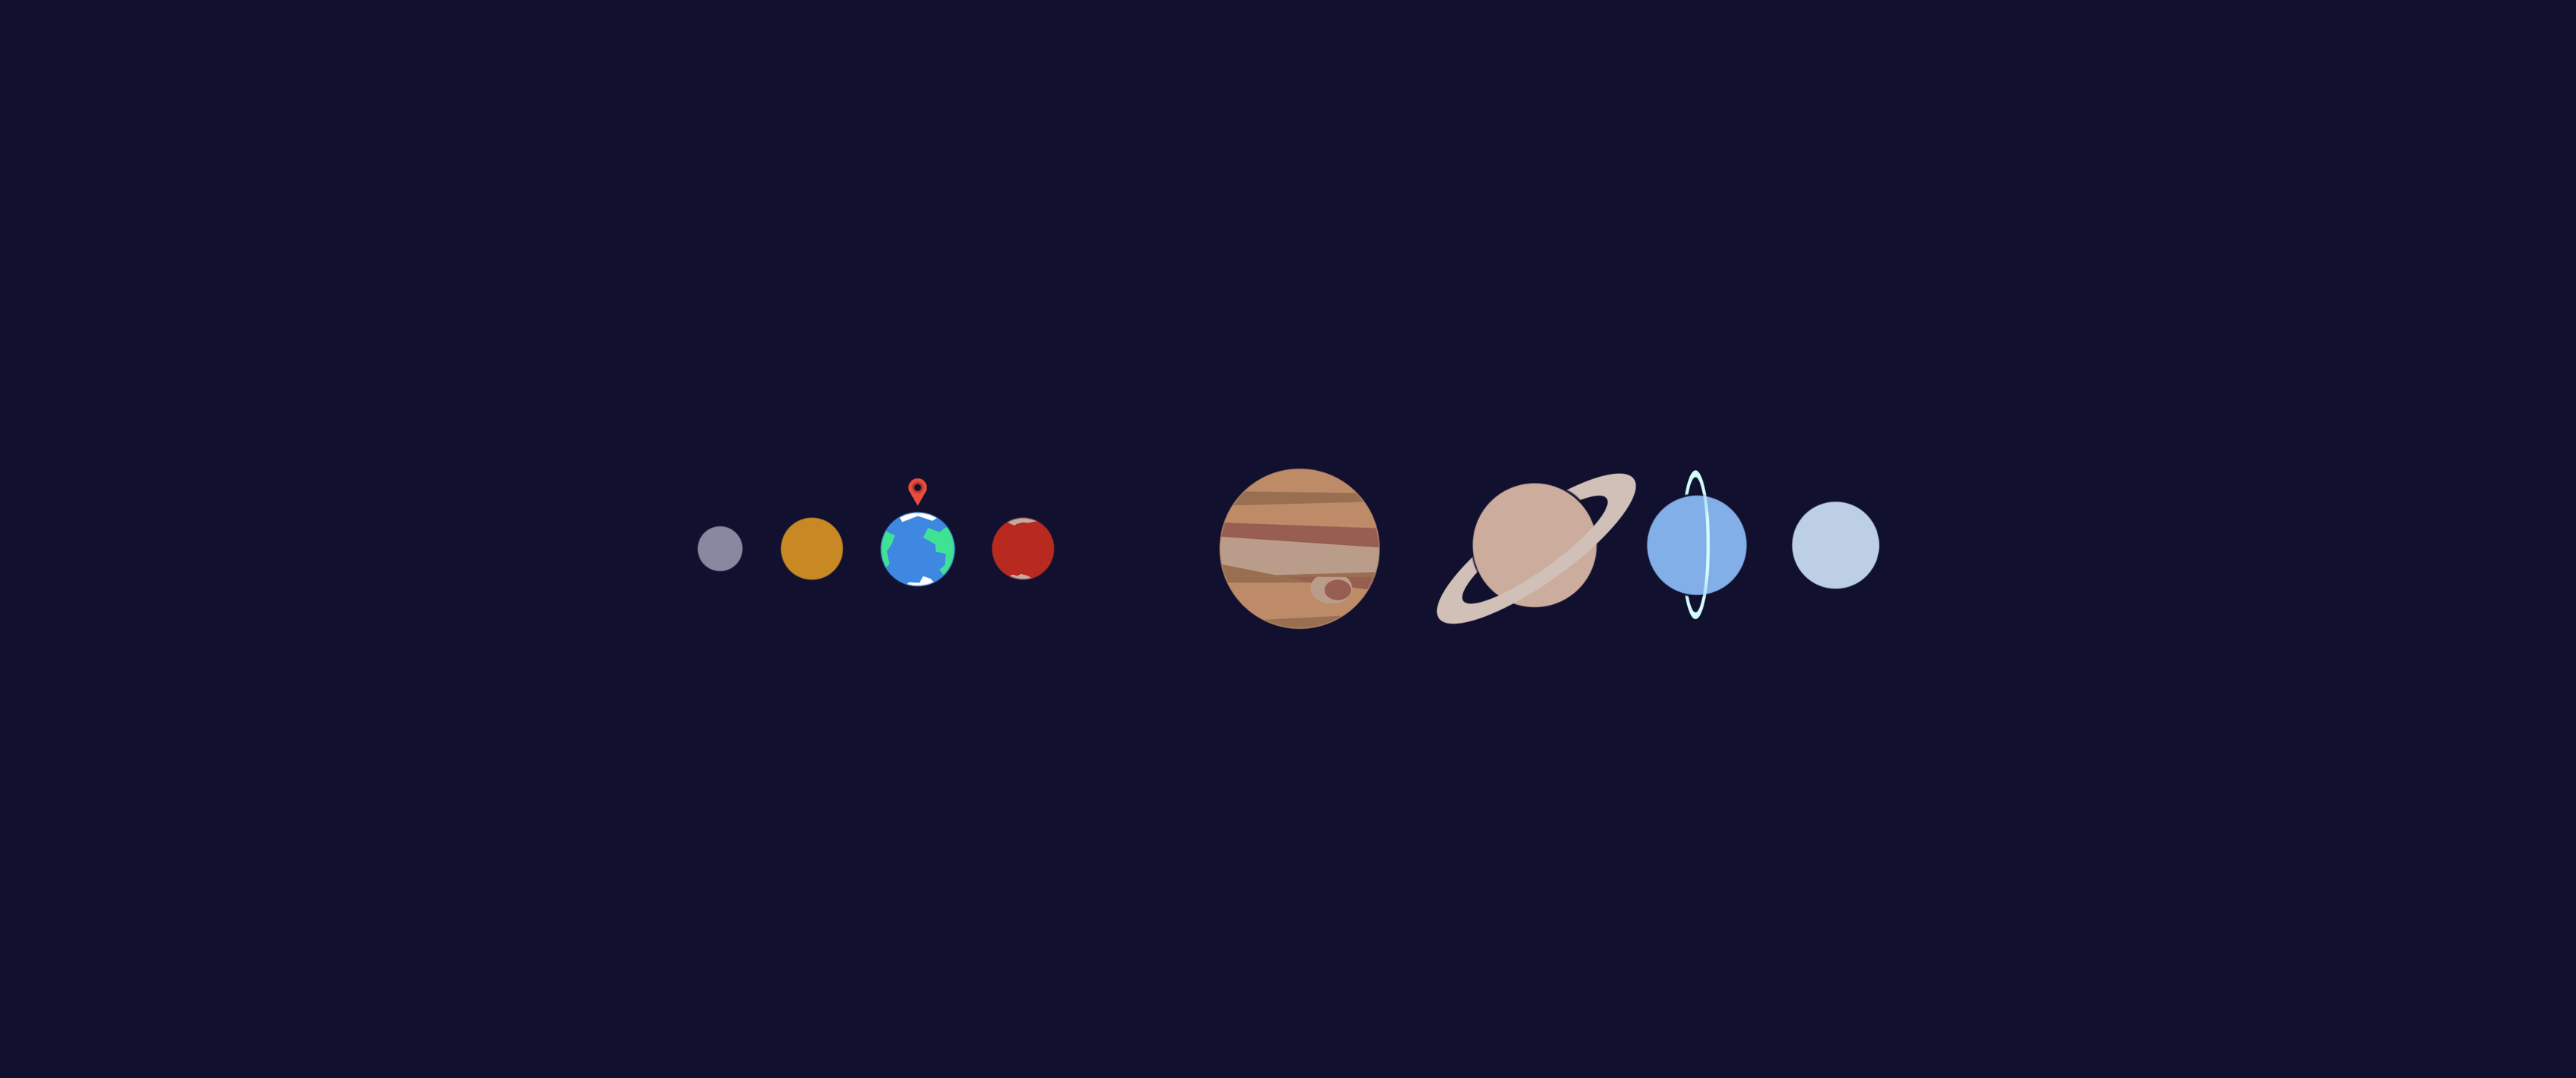 The solar system in a dark background - 3440x1440